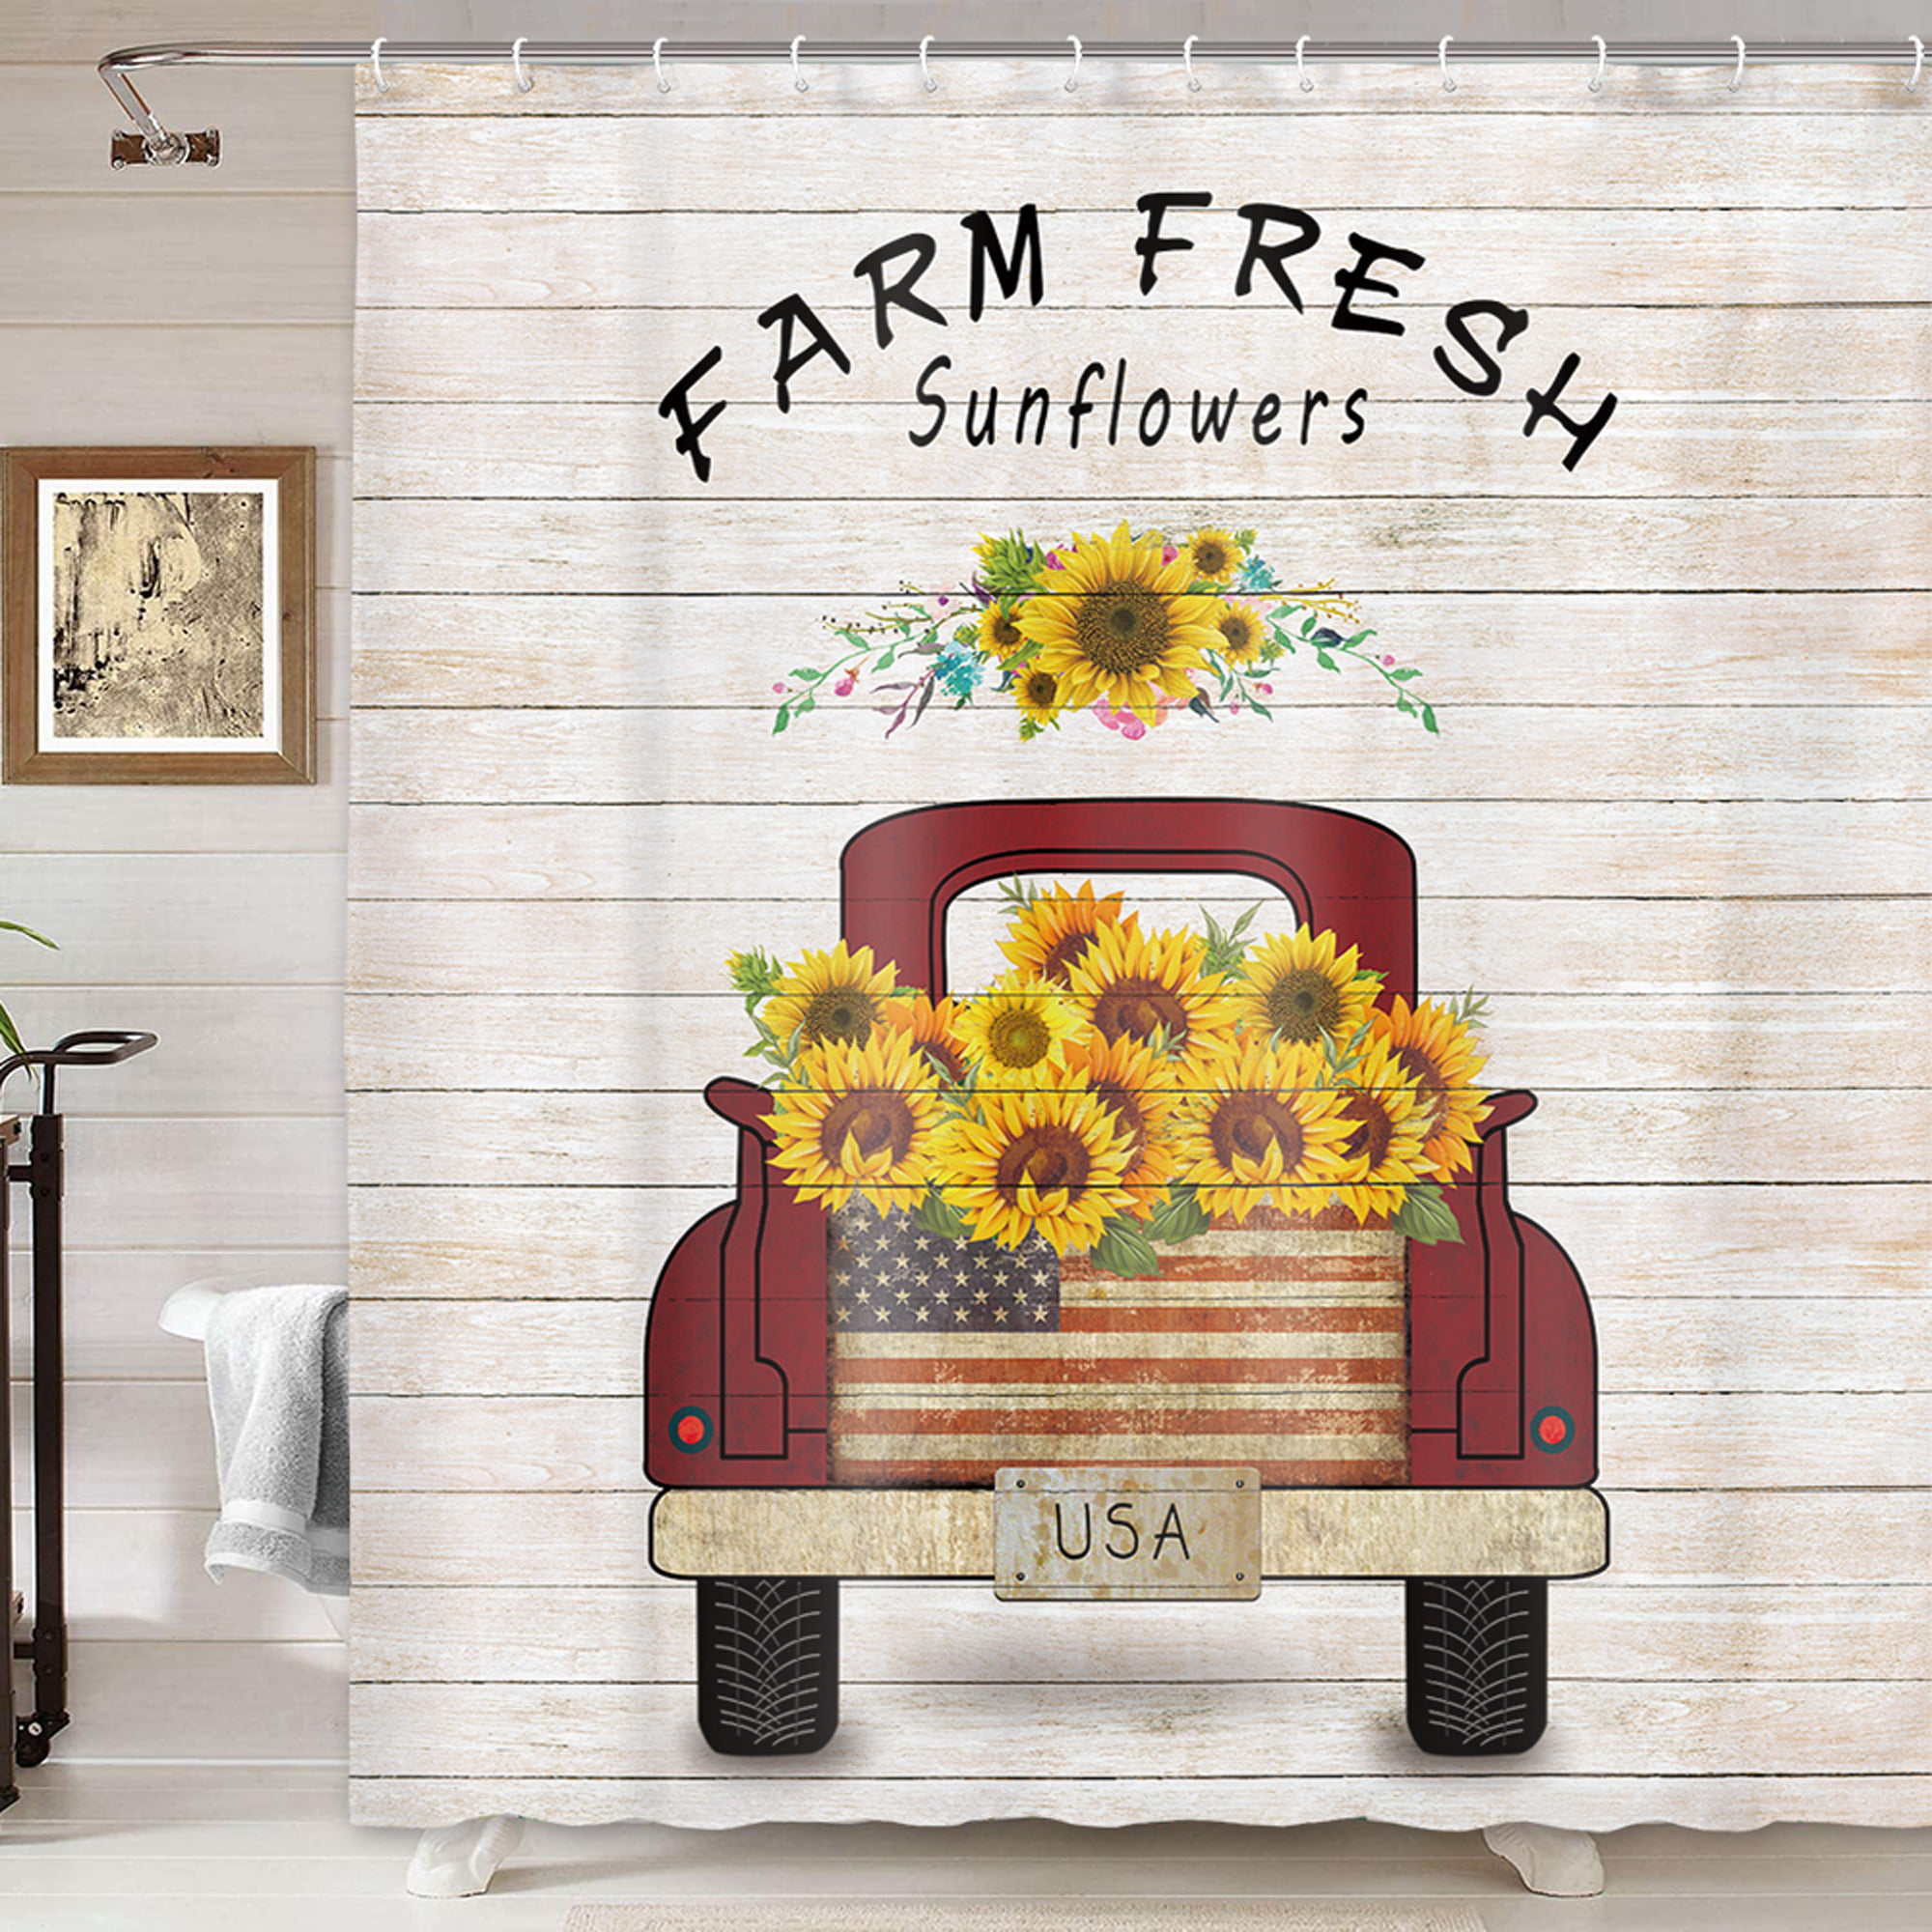 Rustic Brown Wood Board Sunflower Shower Curtain Bathroom Fabric Bath Curtains 